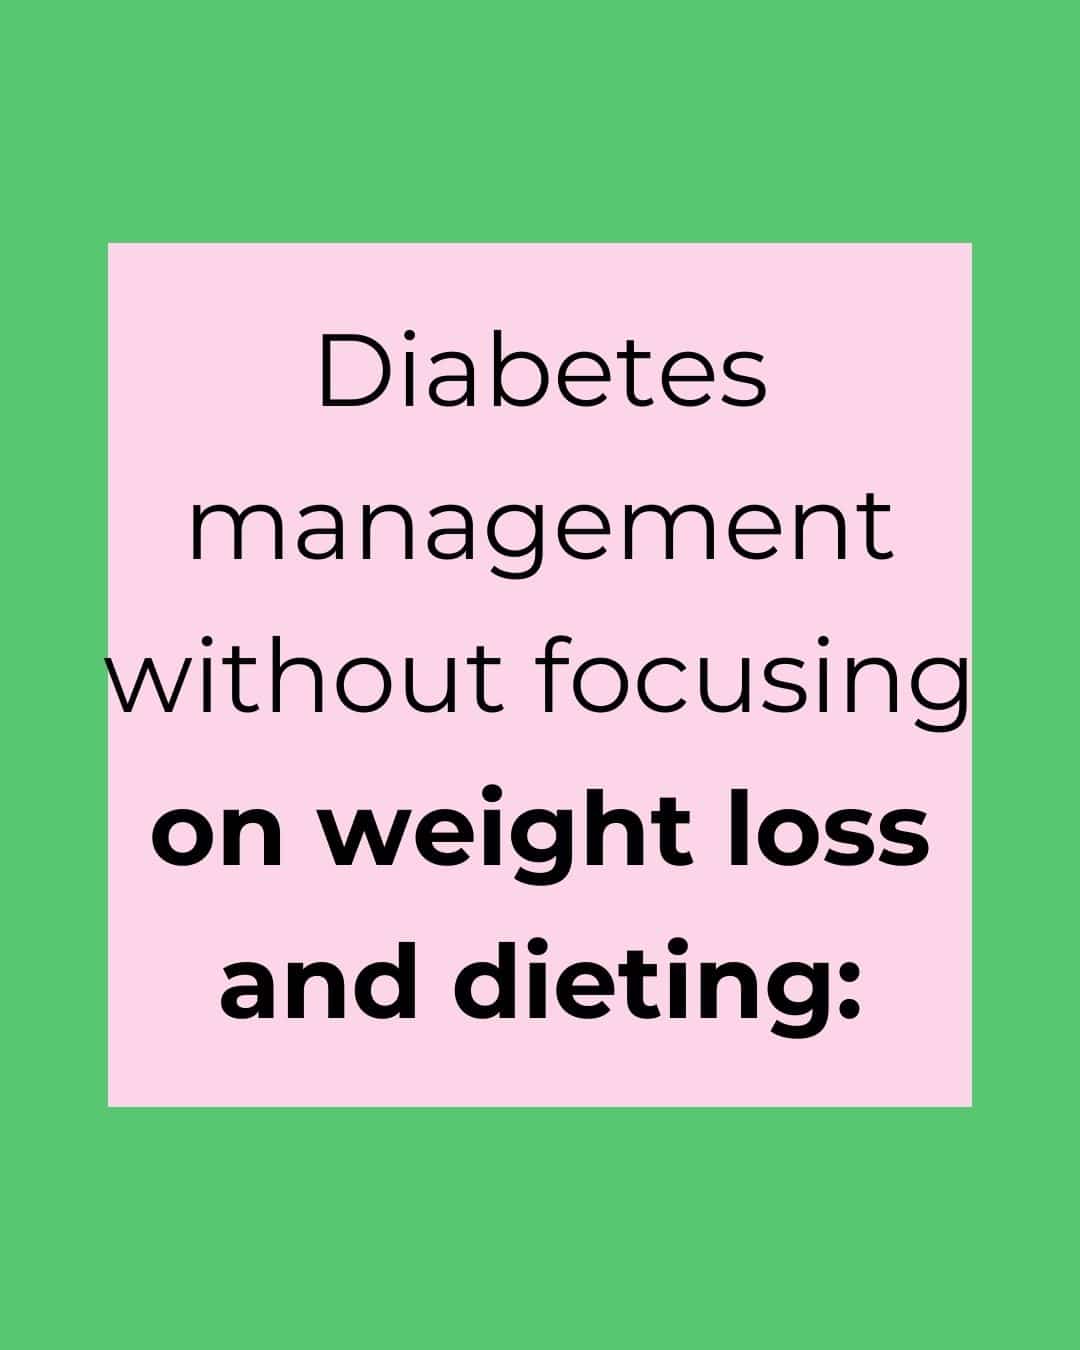 diet free diabetes coaching